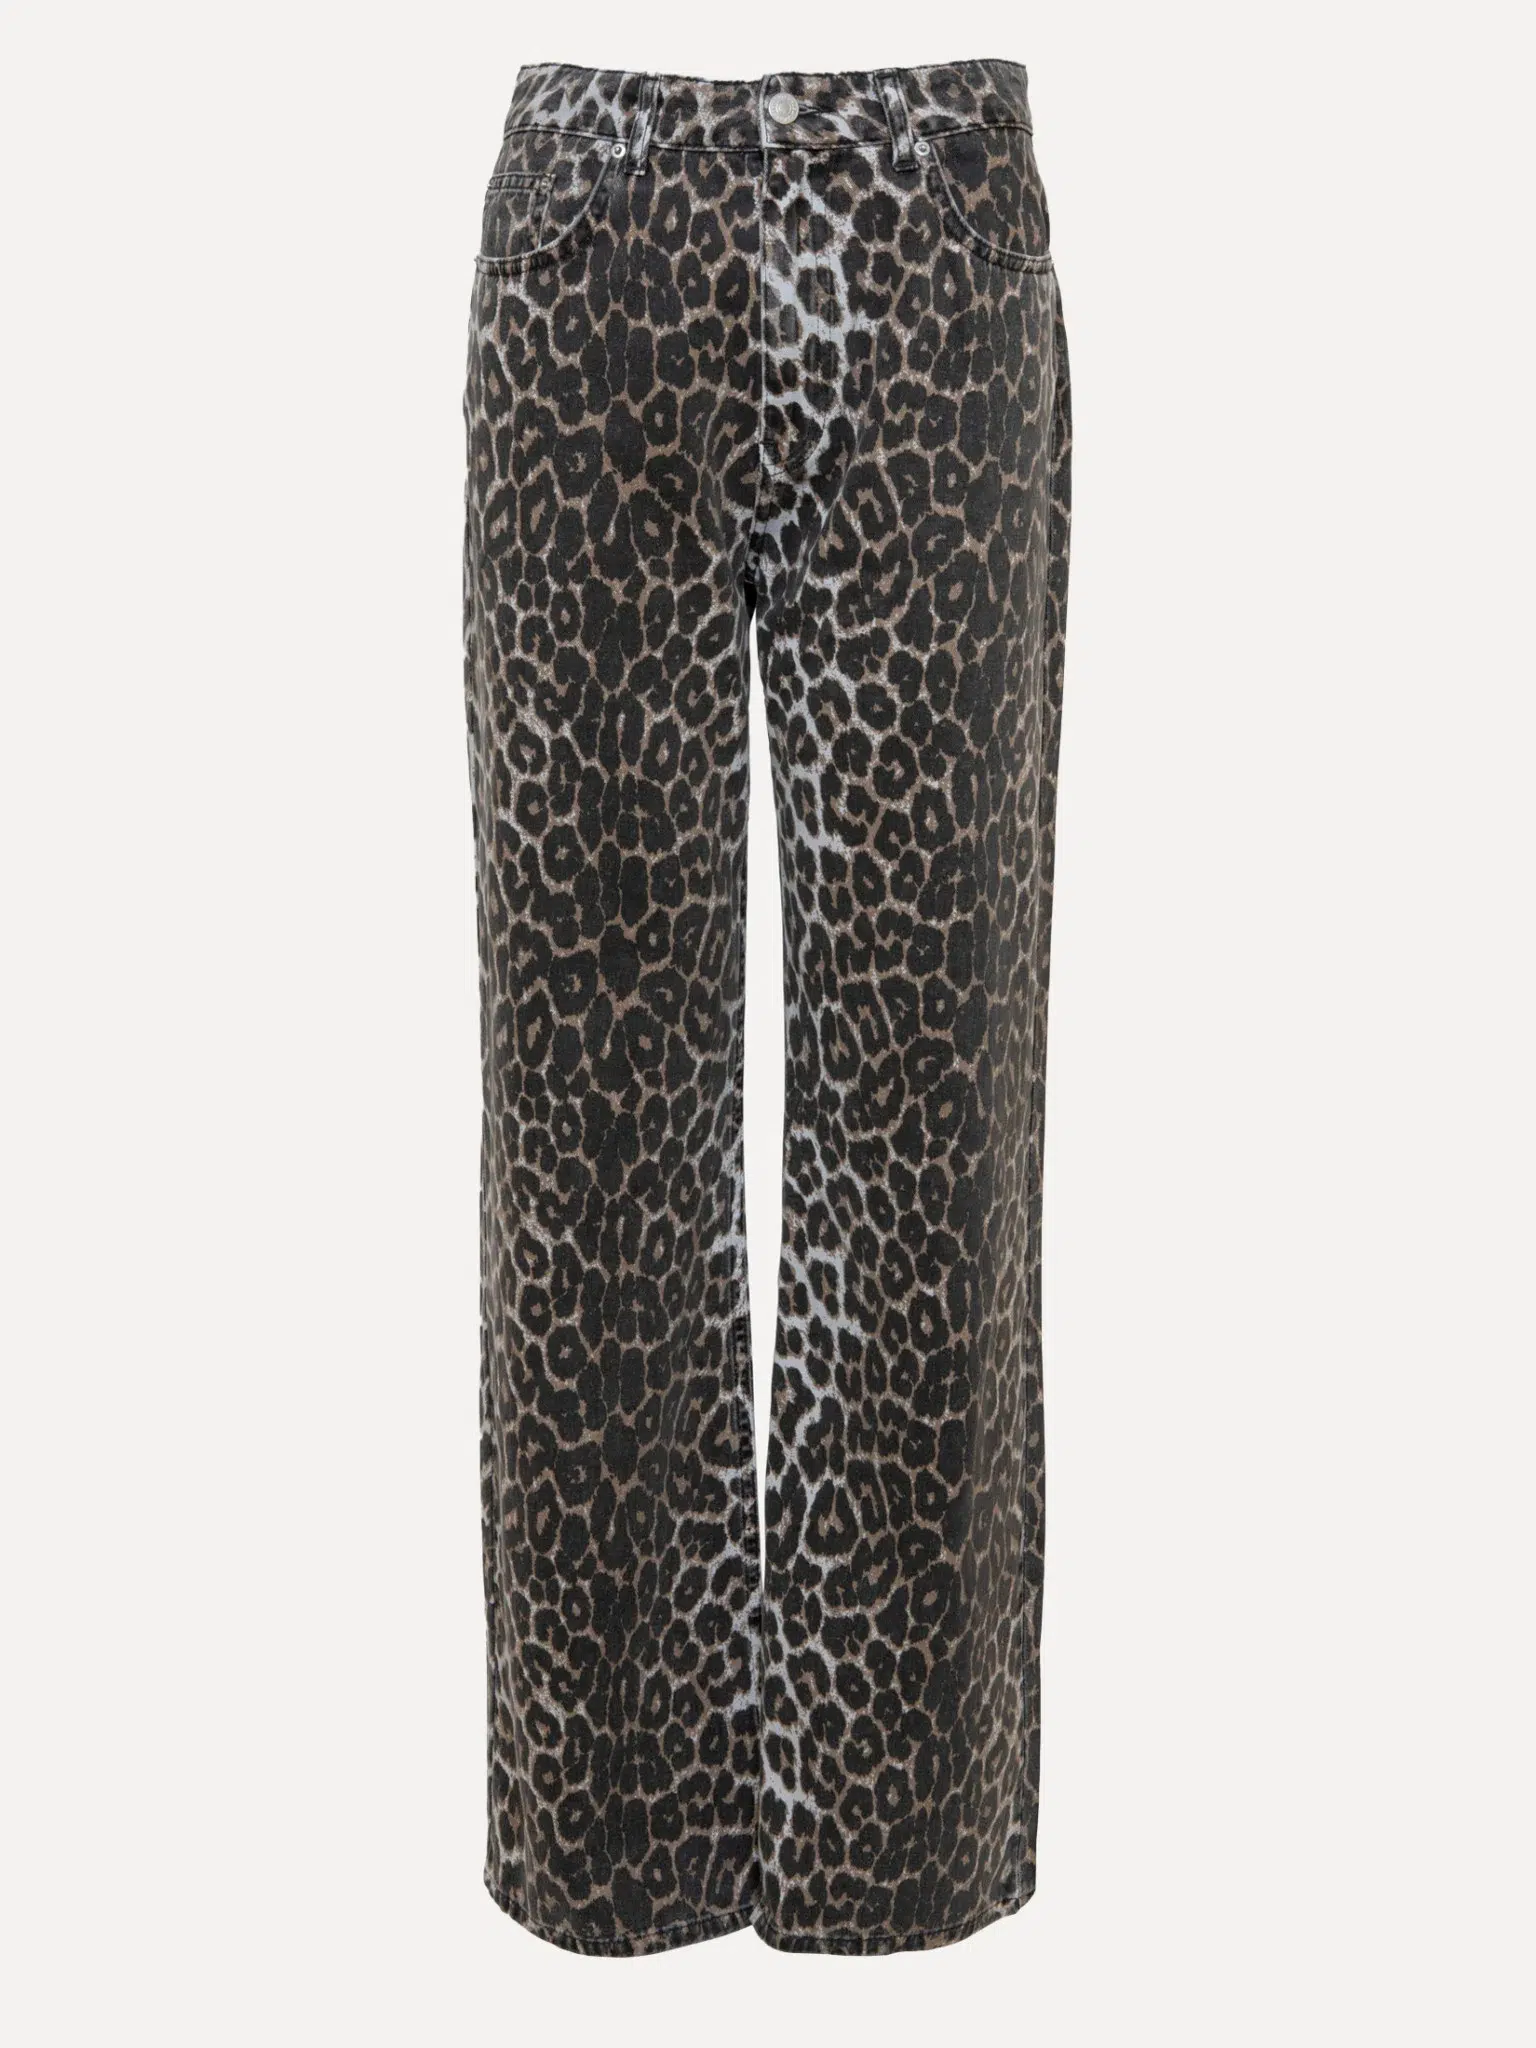 Cheetah pants